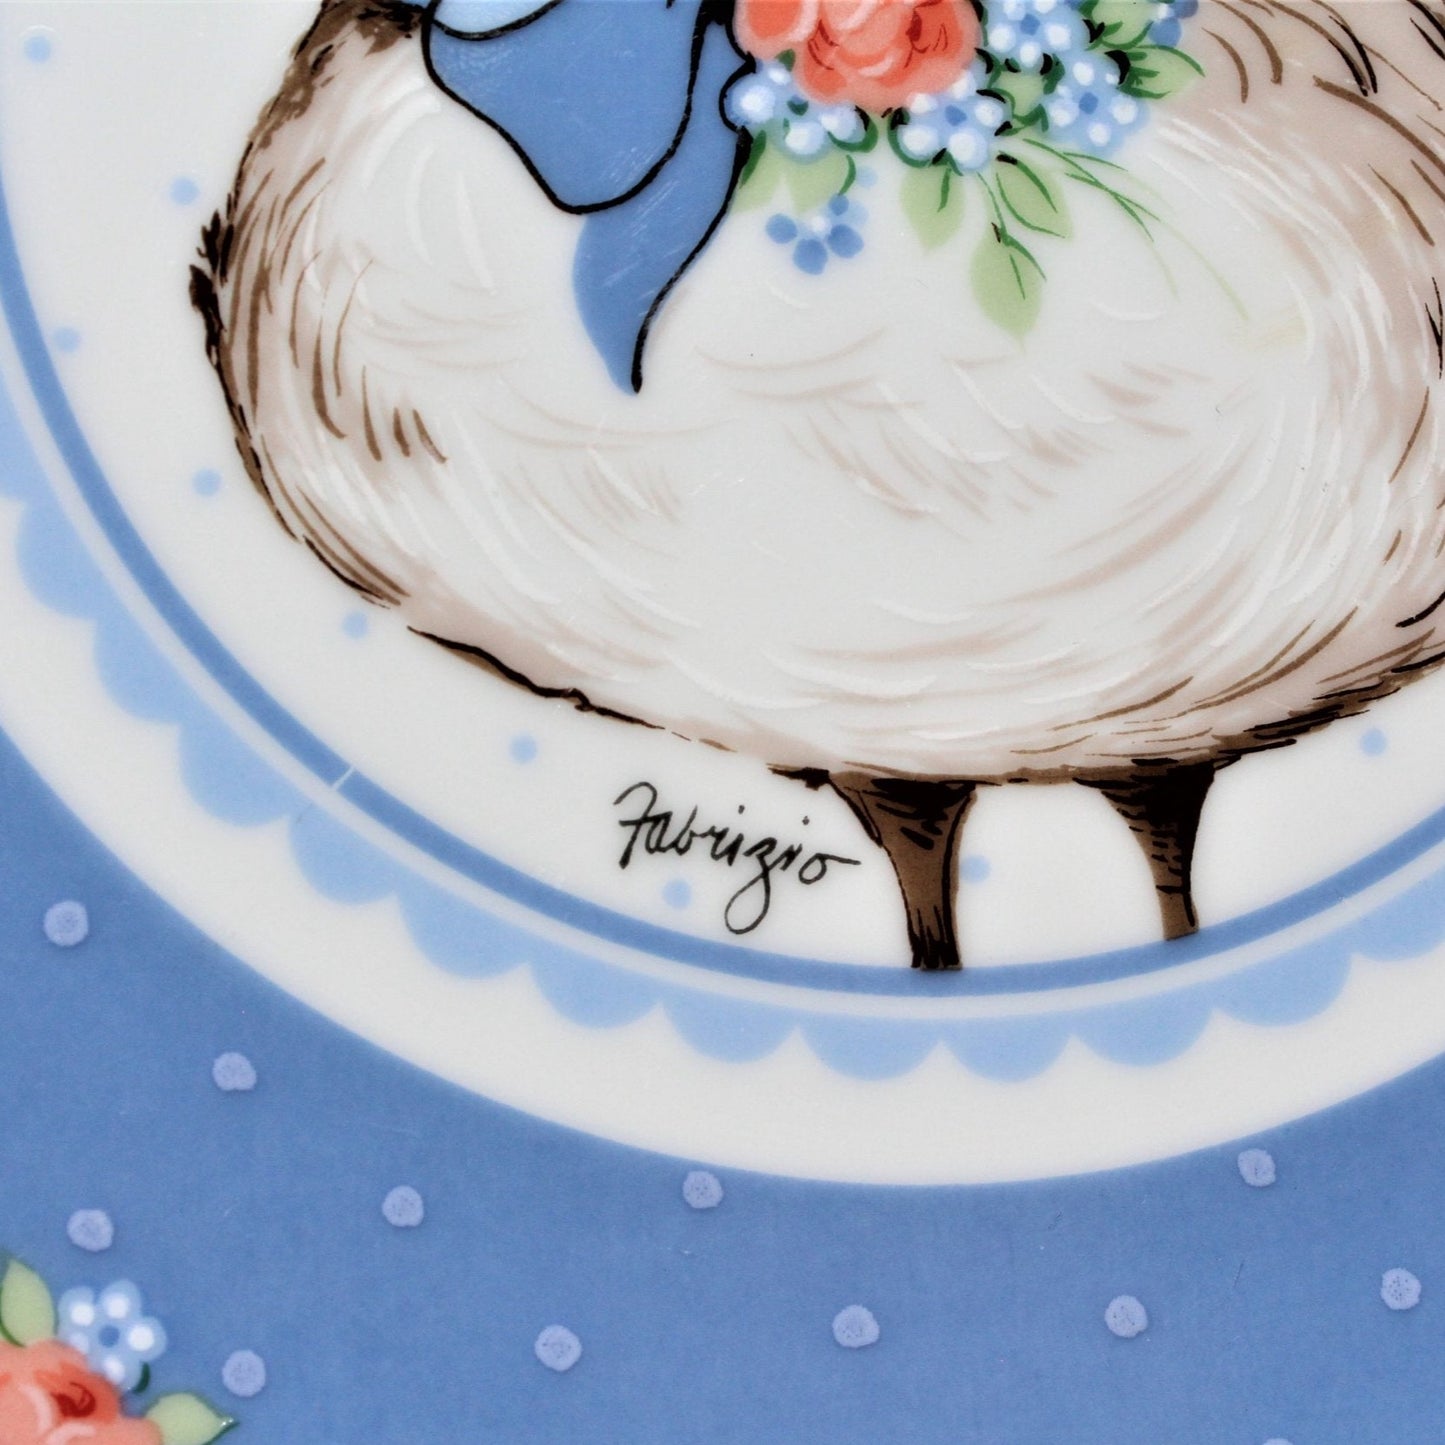 Decorative Plate, George GOOD, Canada Goose by Fabrizio, Porcelain, Vintage 1985